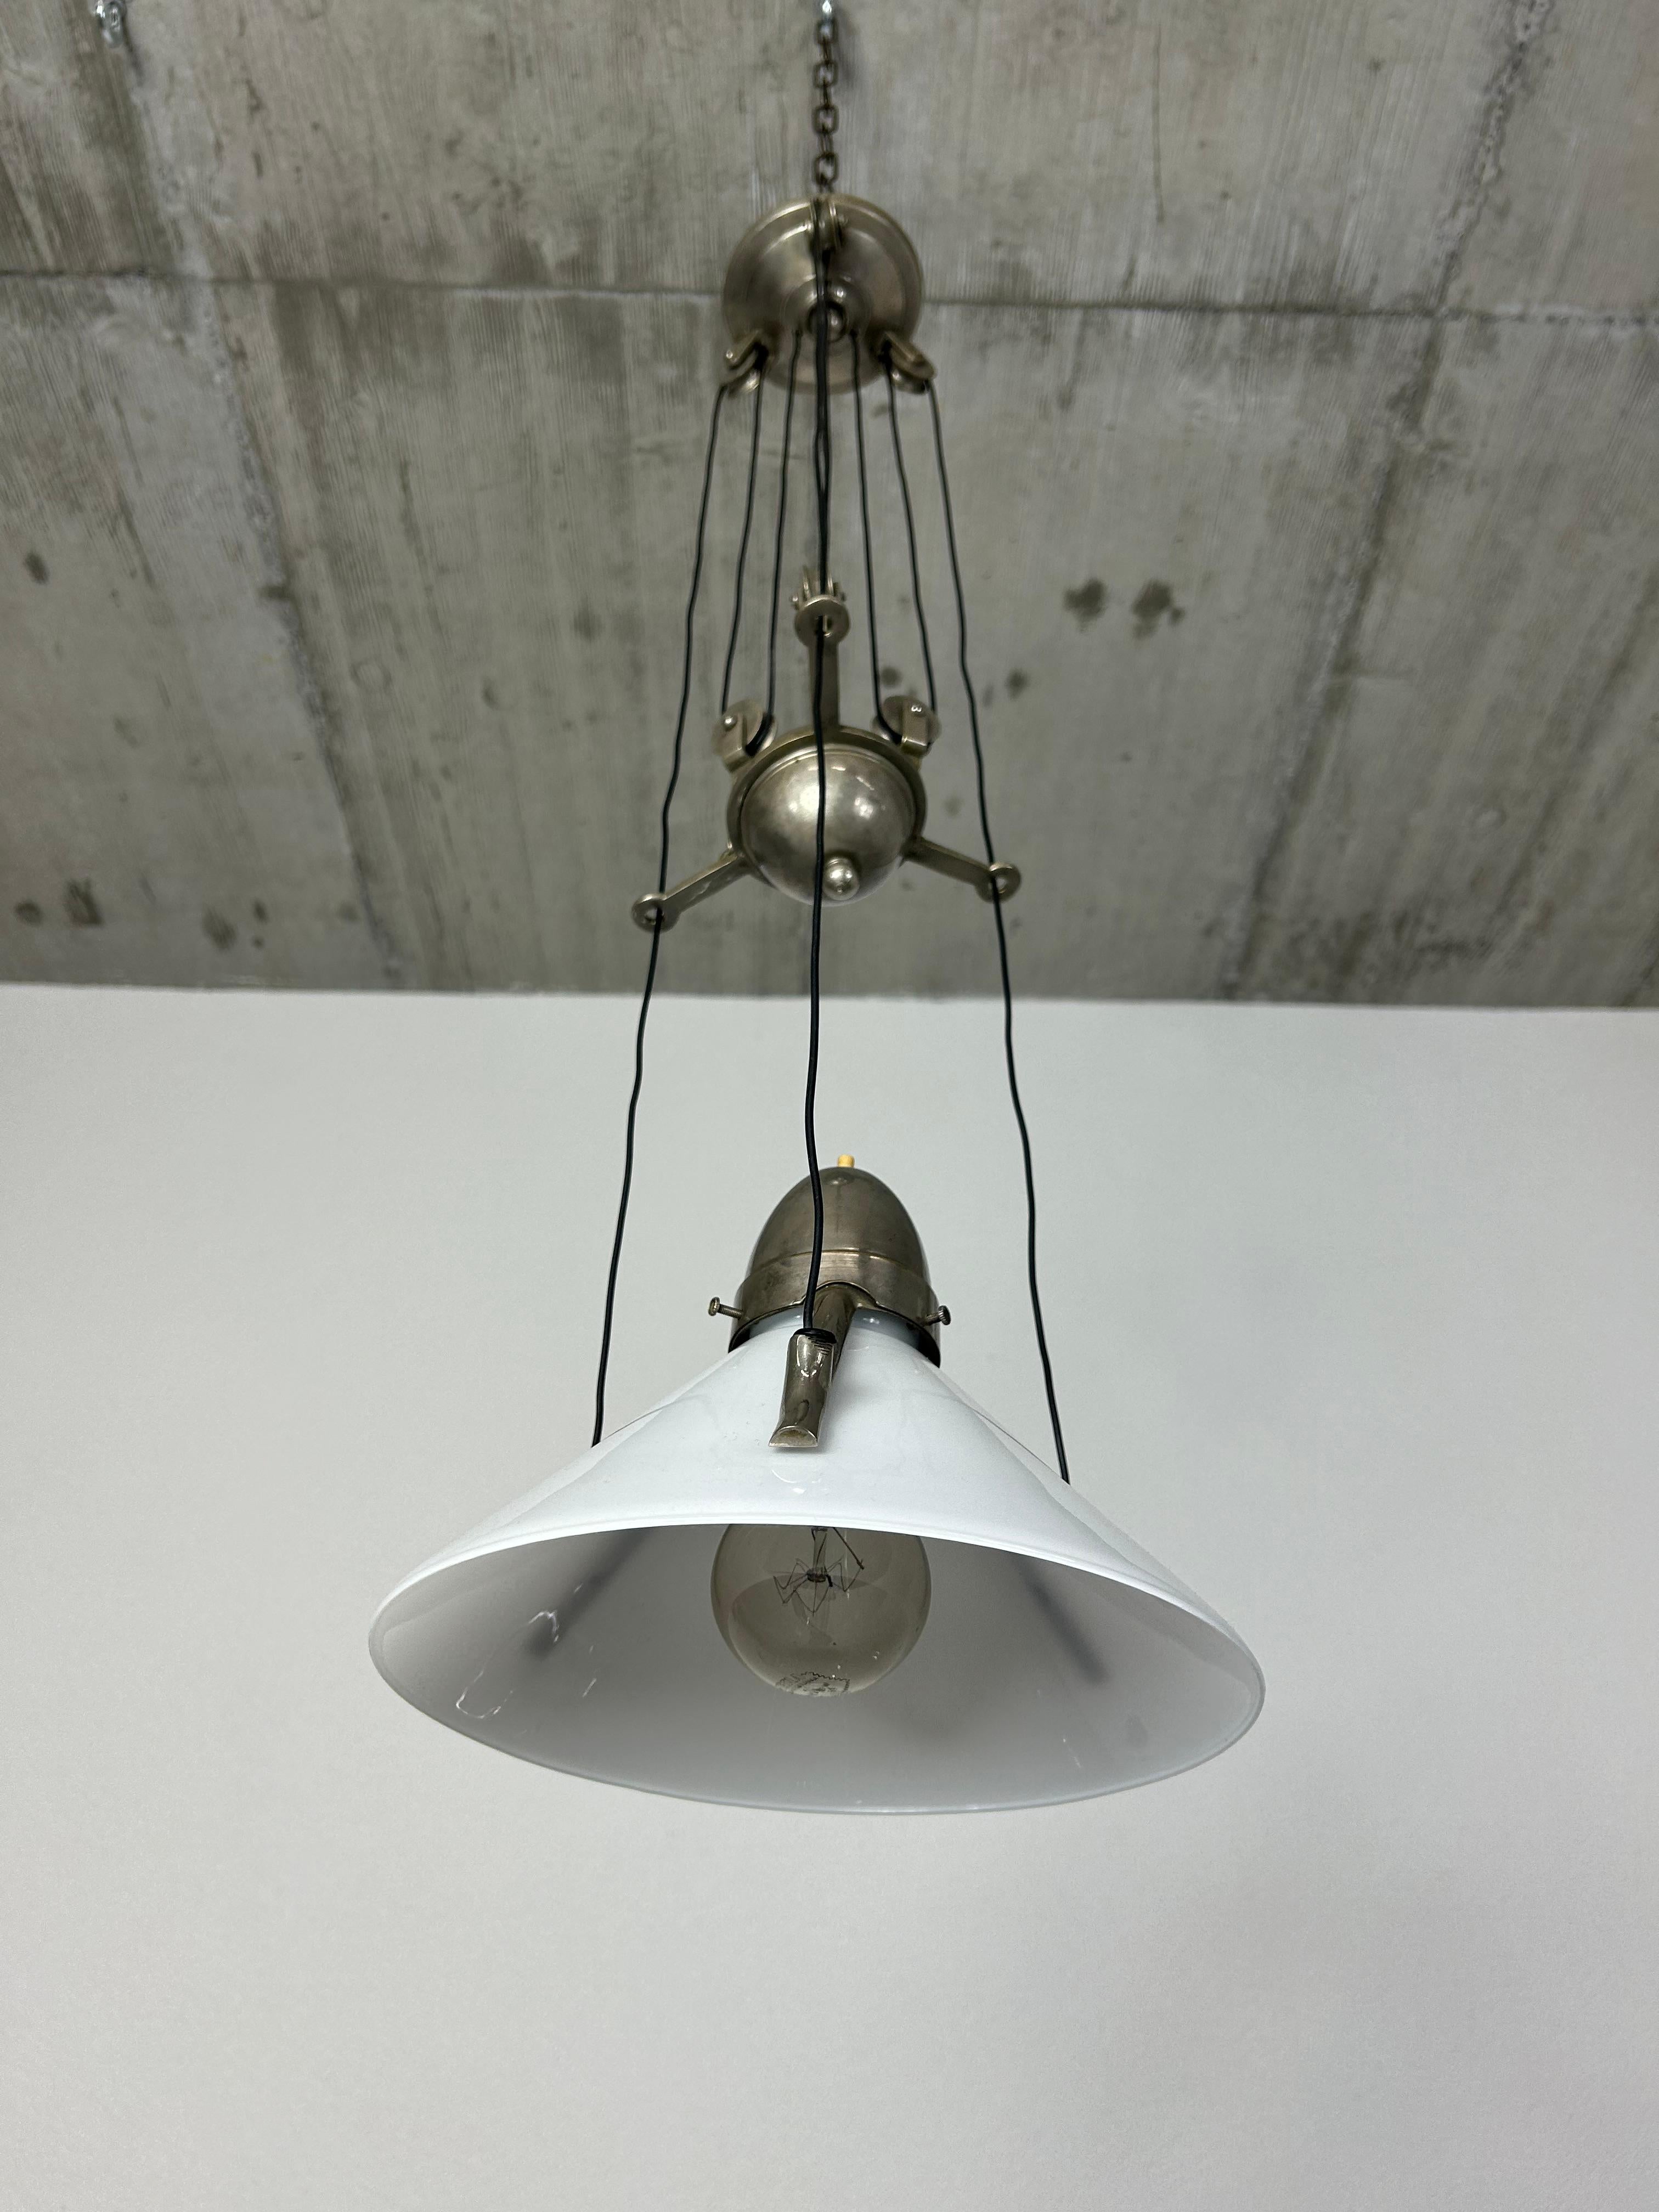 Art deco adjustable hanging lamp in very good original condition.